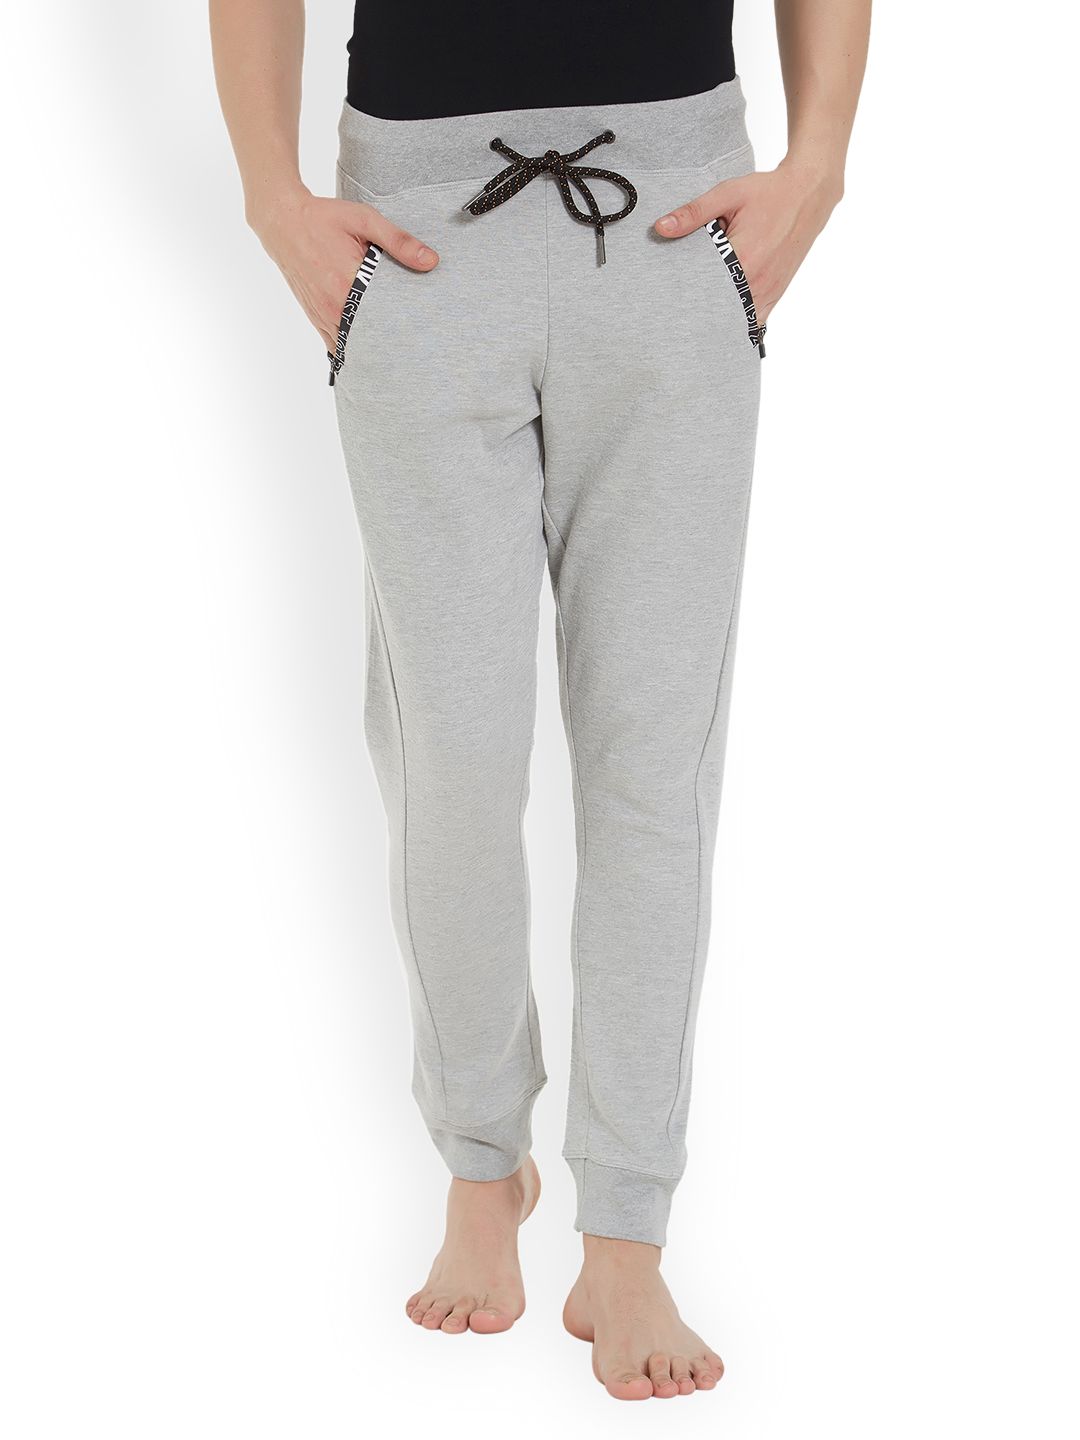 Solid Gray Lounge Pants